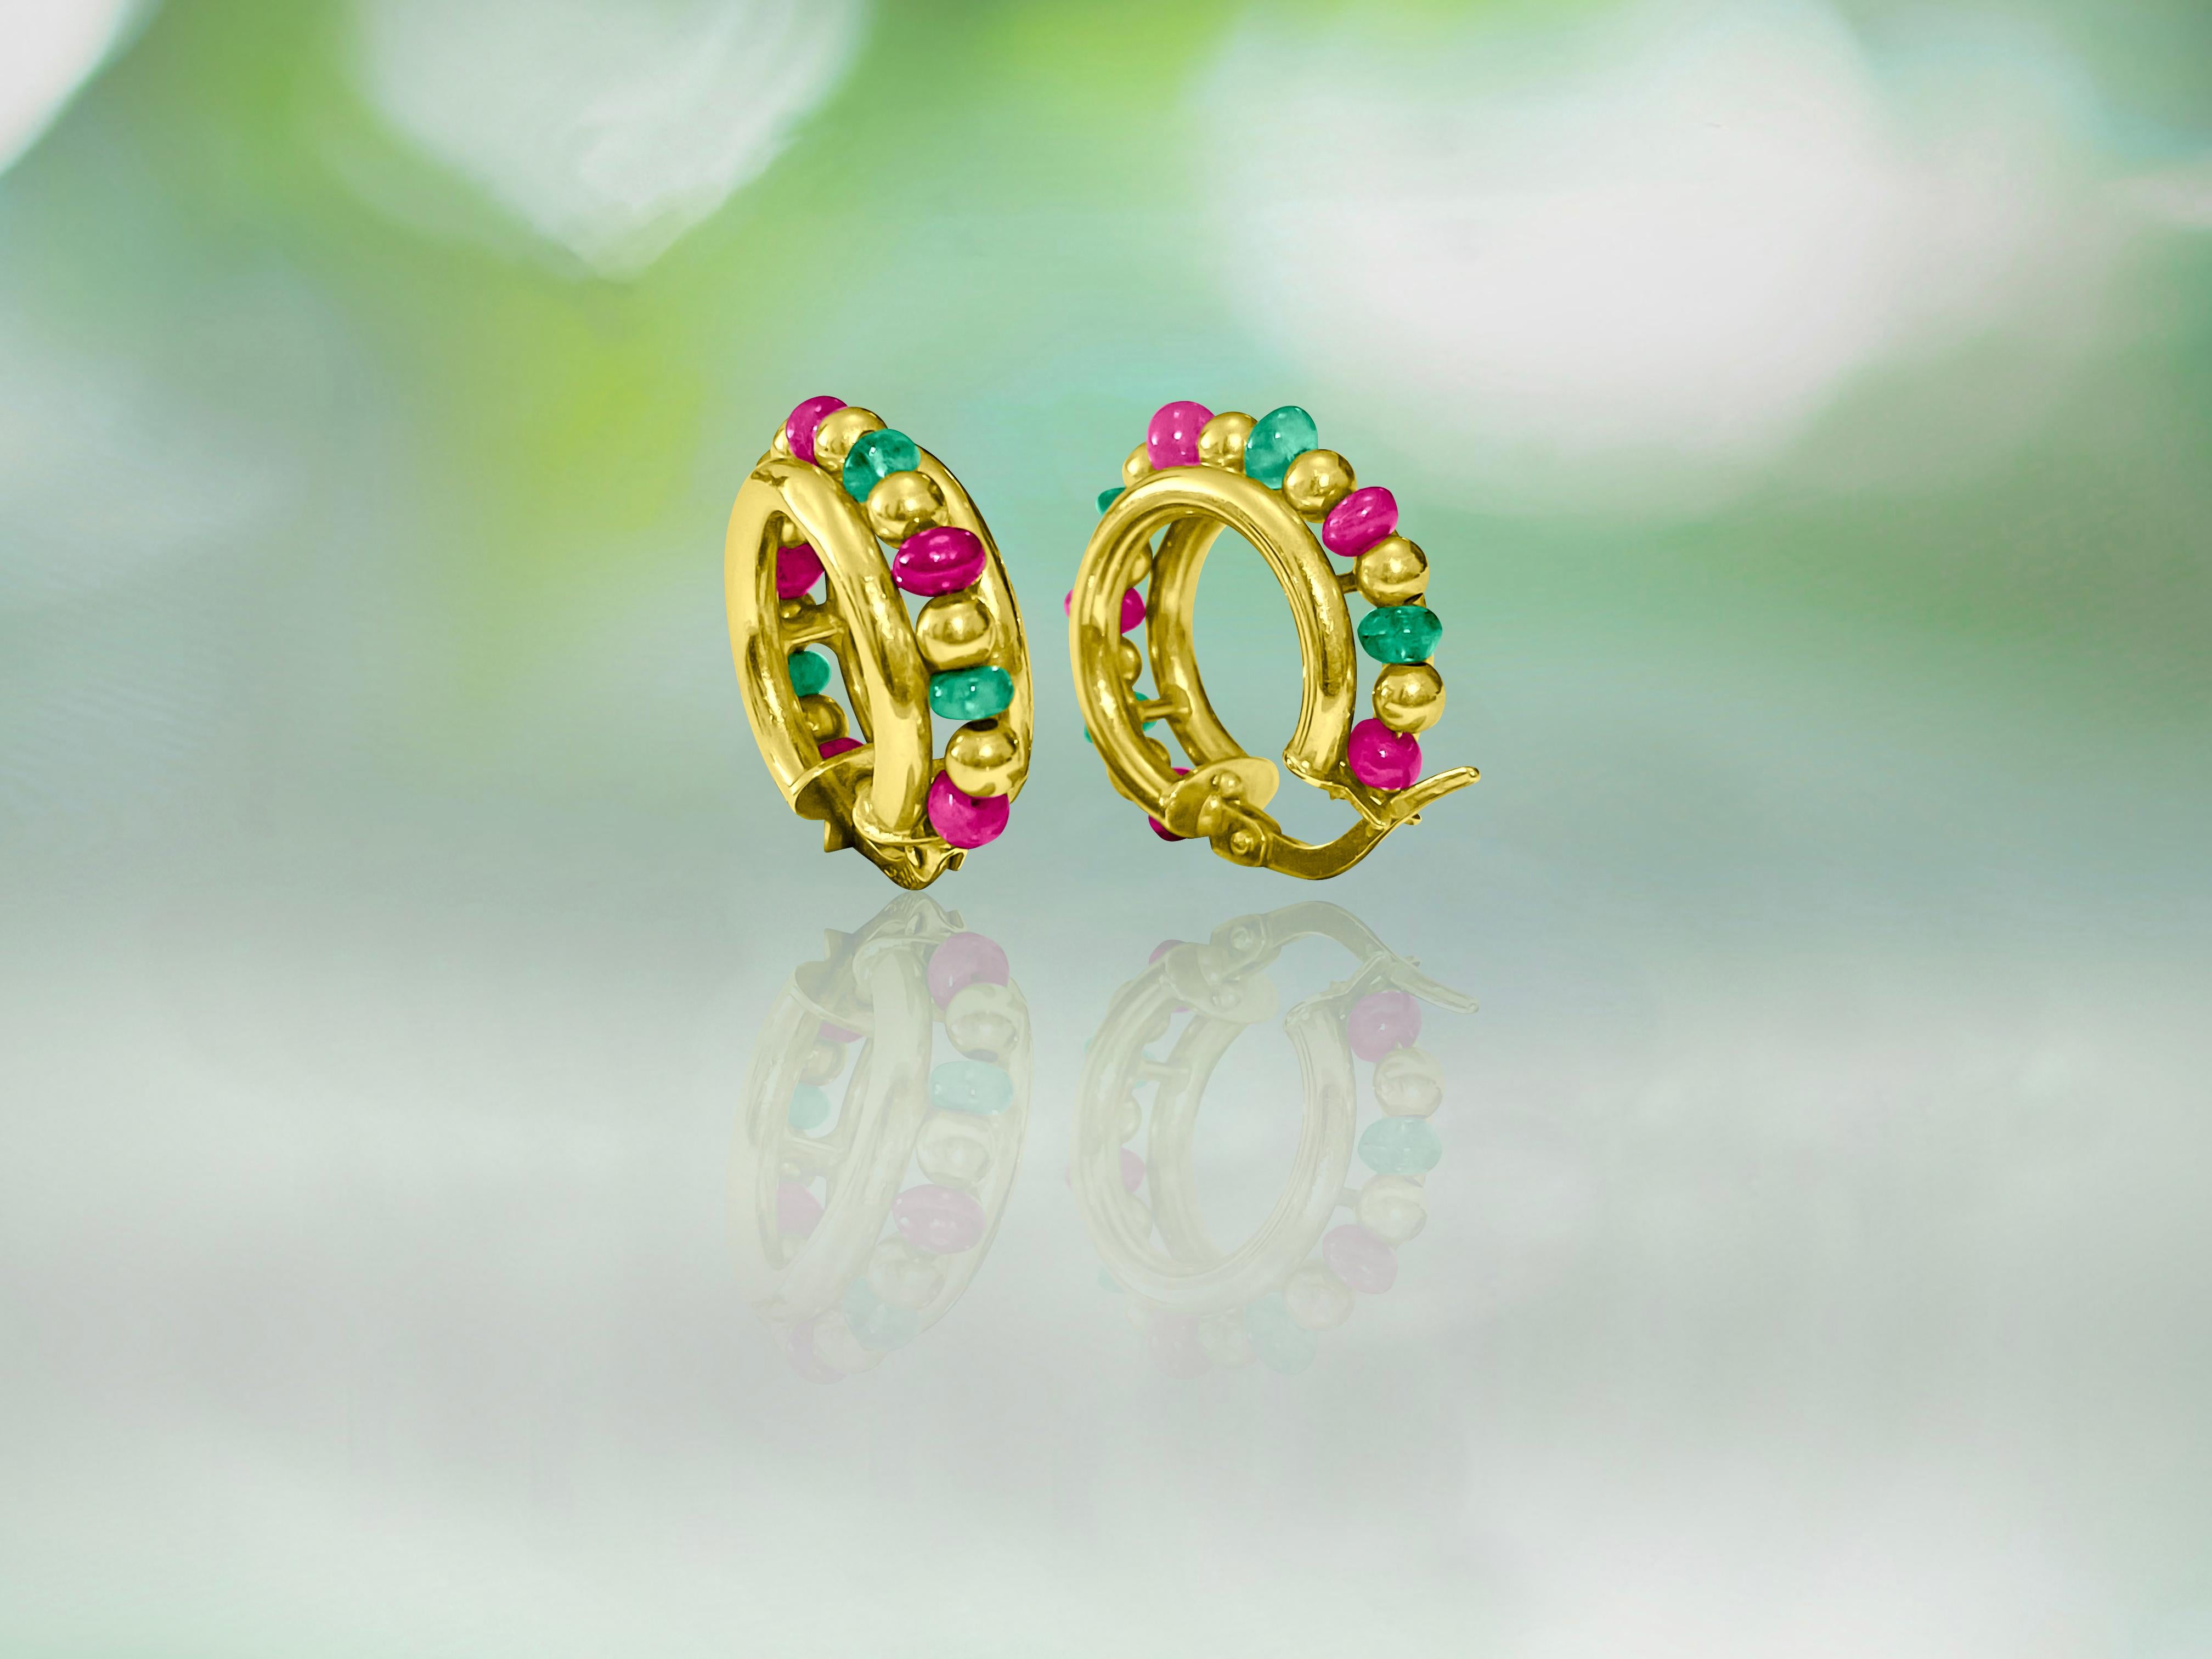 Metal: 18k yellow gold.

Bead ruby and emerald gemstones. 100% natural earth mined gemstones. 

Beautiful hoop gold, emerald, ruby earrings for her. Vintage Indian style gemstone earrings. 

